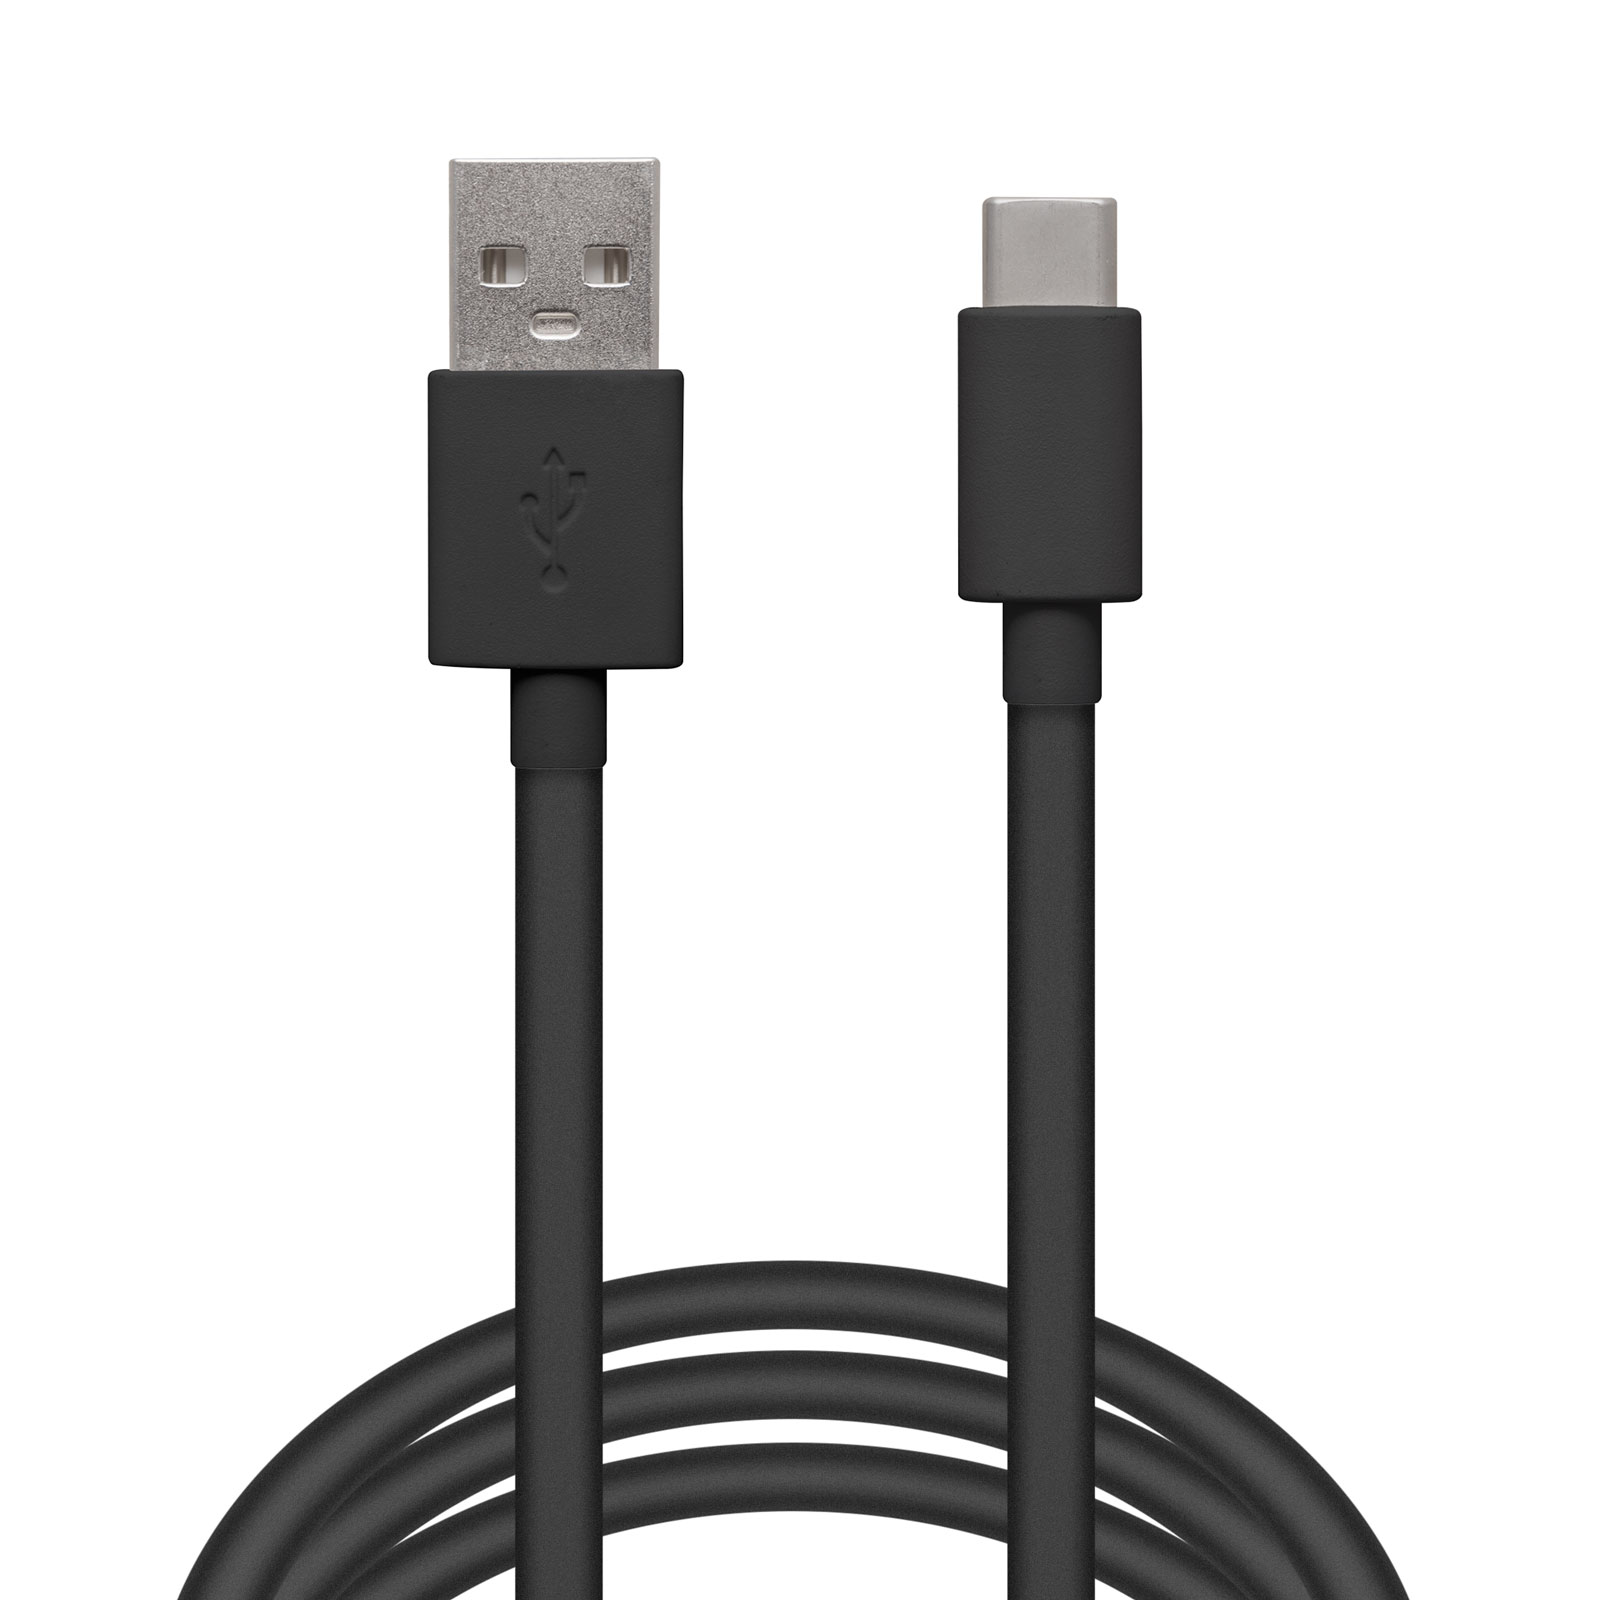 Adatkábel - USB Type-C - fekete - 2 m thumb